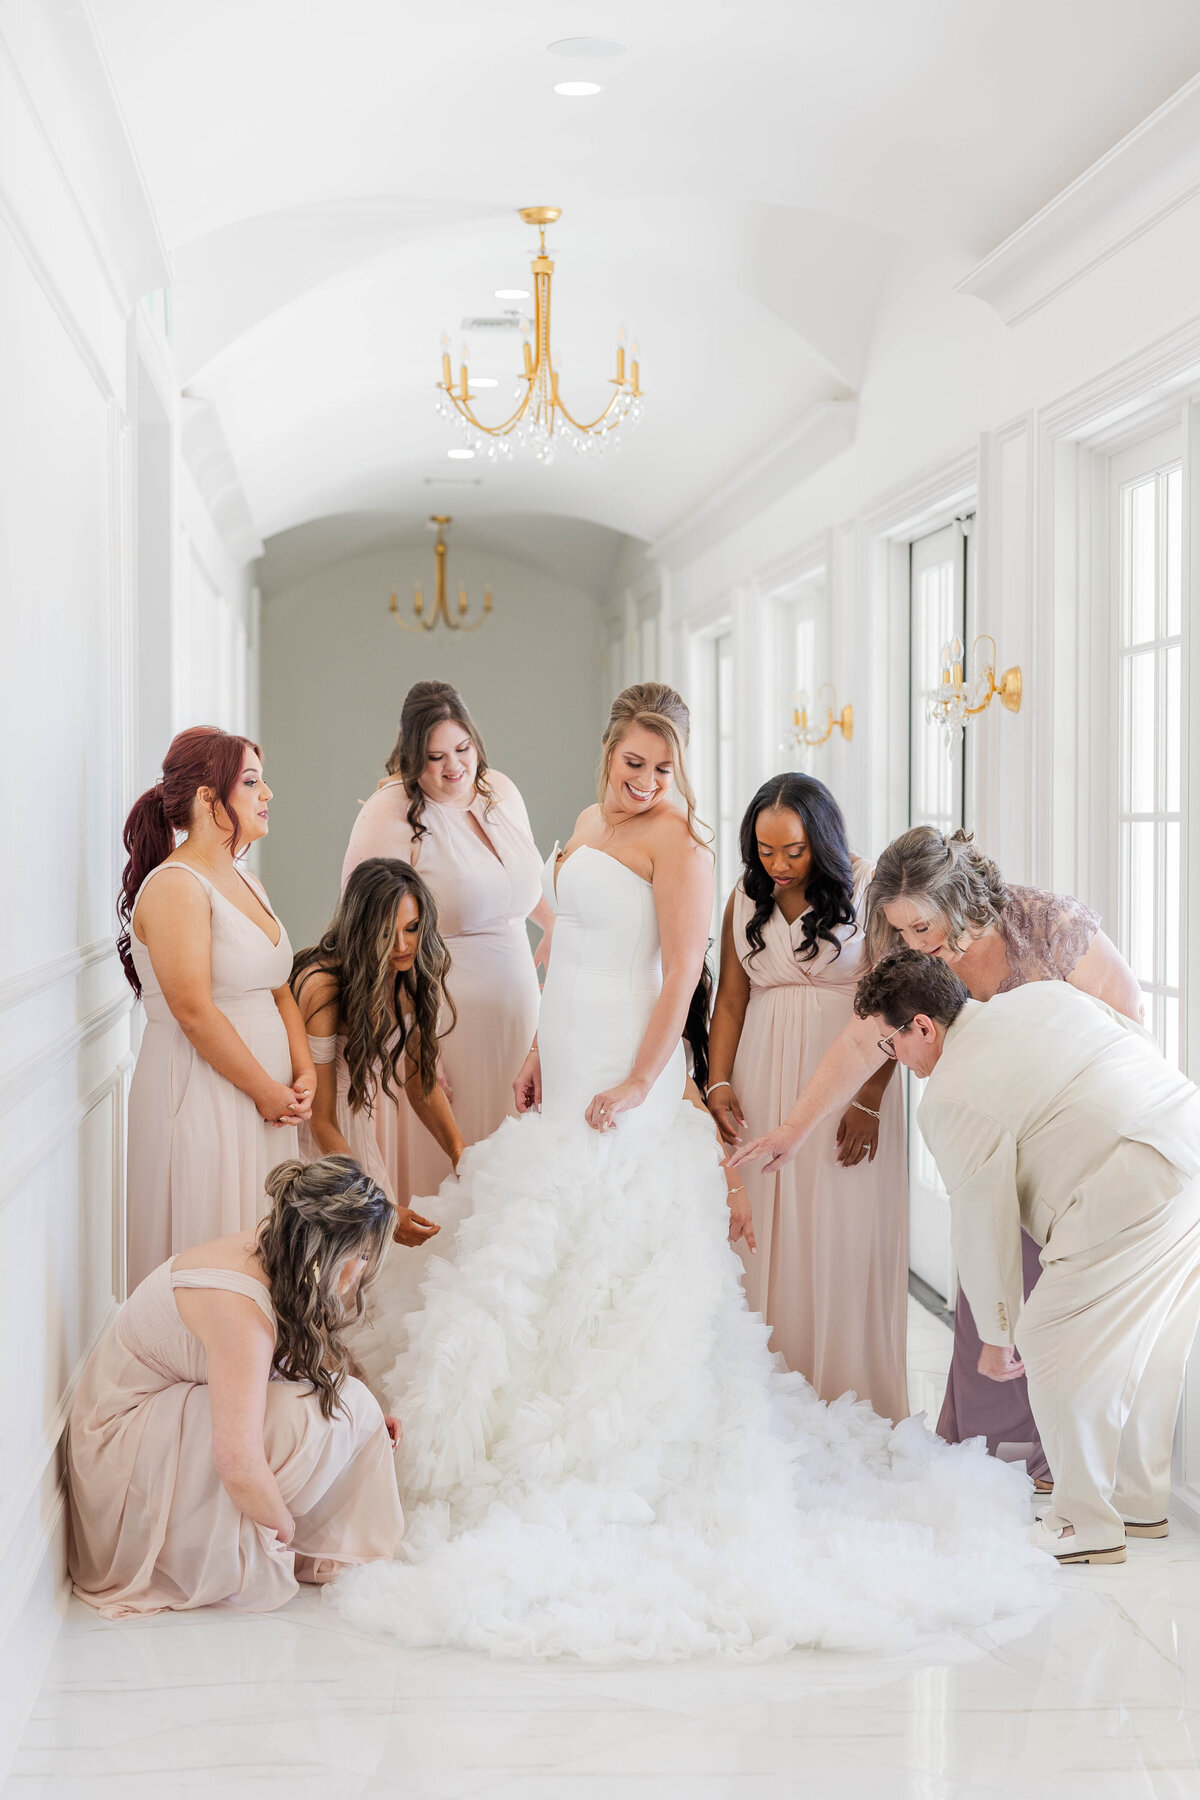 Bridal-party-fluffing-brides-dress-in-hallway-at-Hillside-Estates-wedding-venue